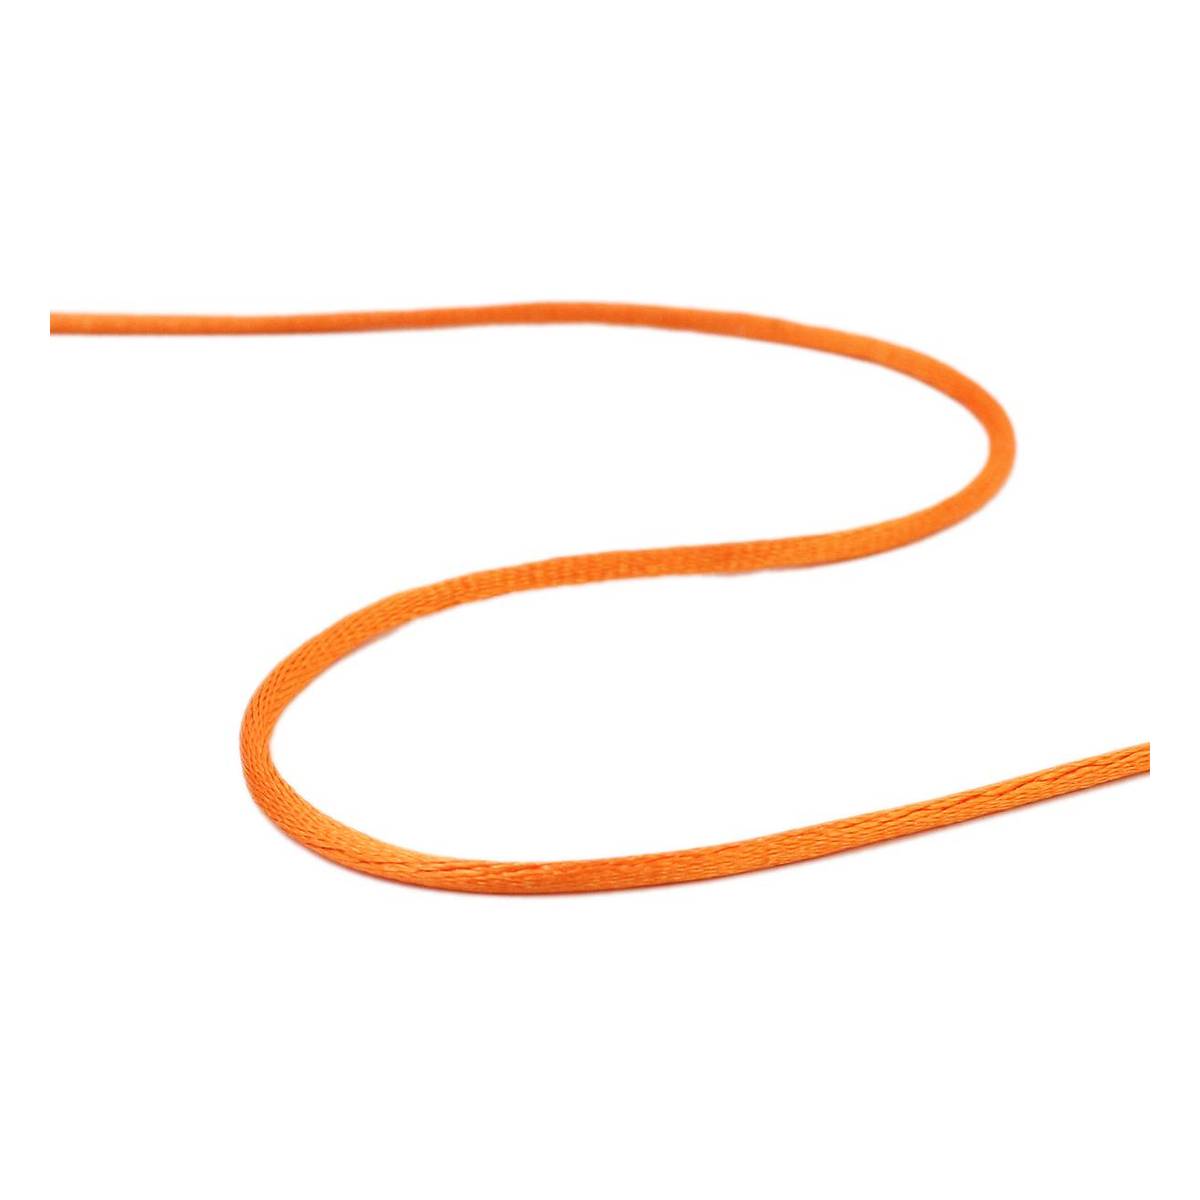 https://www.hobbycraft.co.uk/on/demandware.static/-/Sites-hobbycraft-uk-master/default/dwb82bcdef/images/large/568020_1010_1_-orange-ribbon-knot-cord-2mm-x-10m.jpg